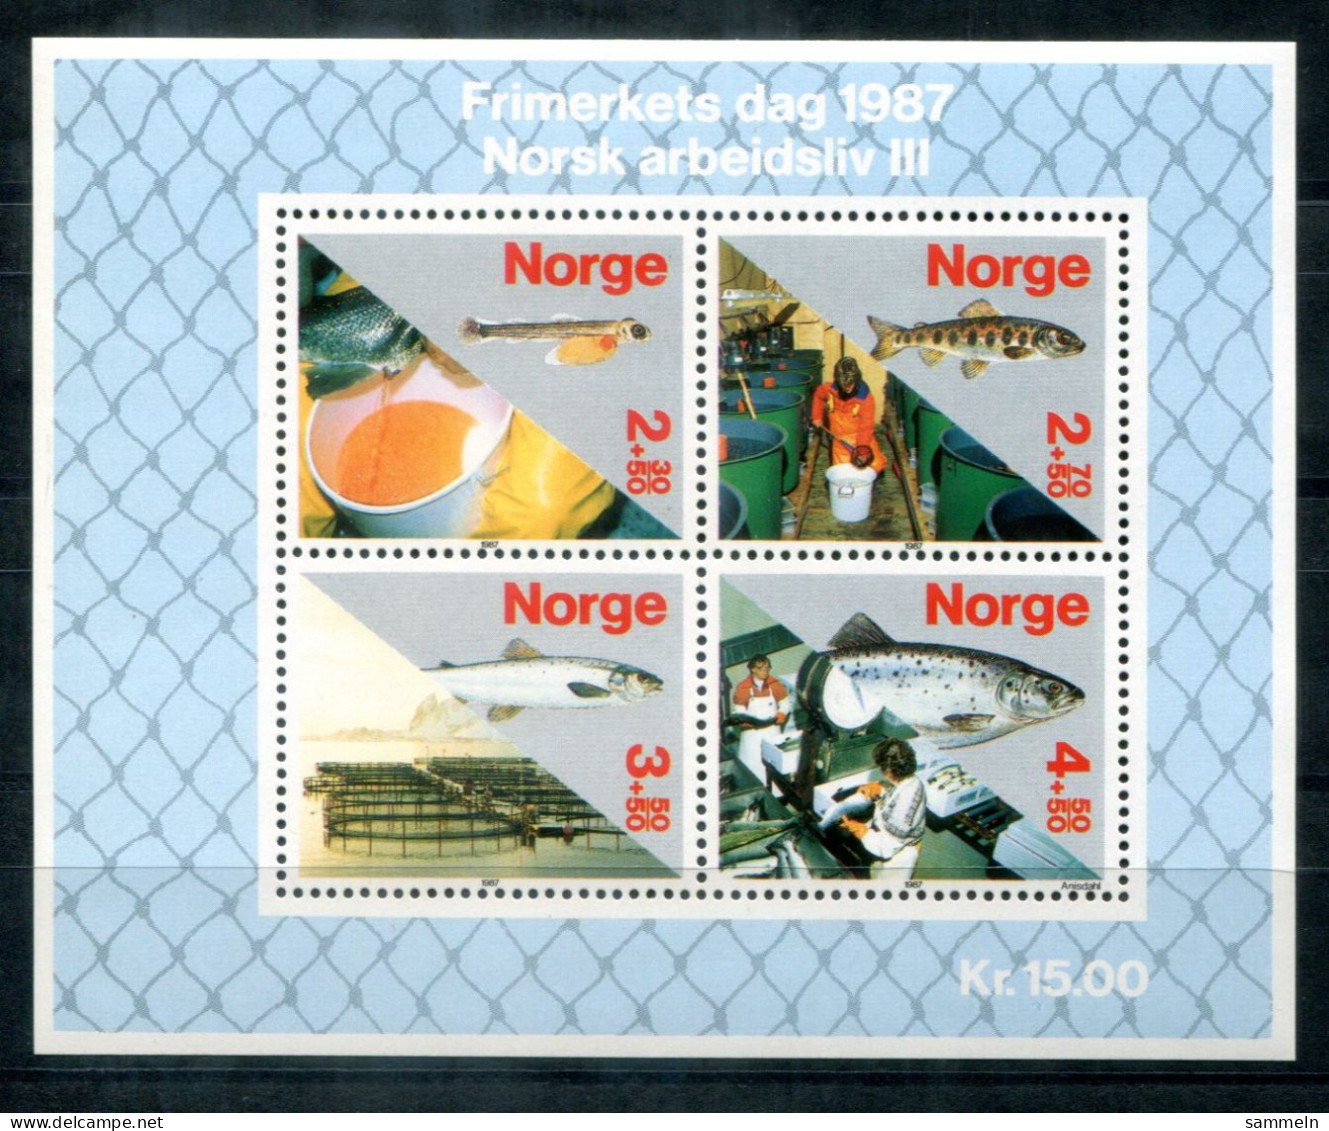 NORWEGEN Block 8, Bl.8 Mnh - Sisch, Fish, Poisson - NORWAY / NORVÈGE - Blocks & Sheetlets